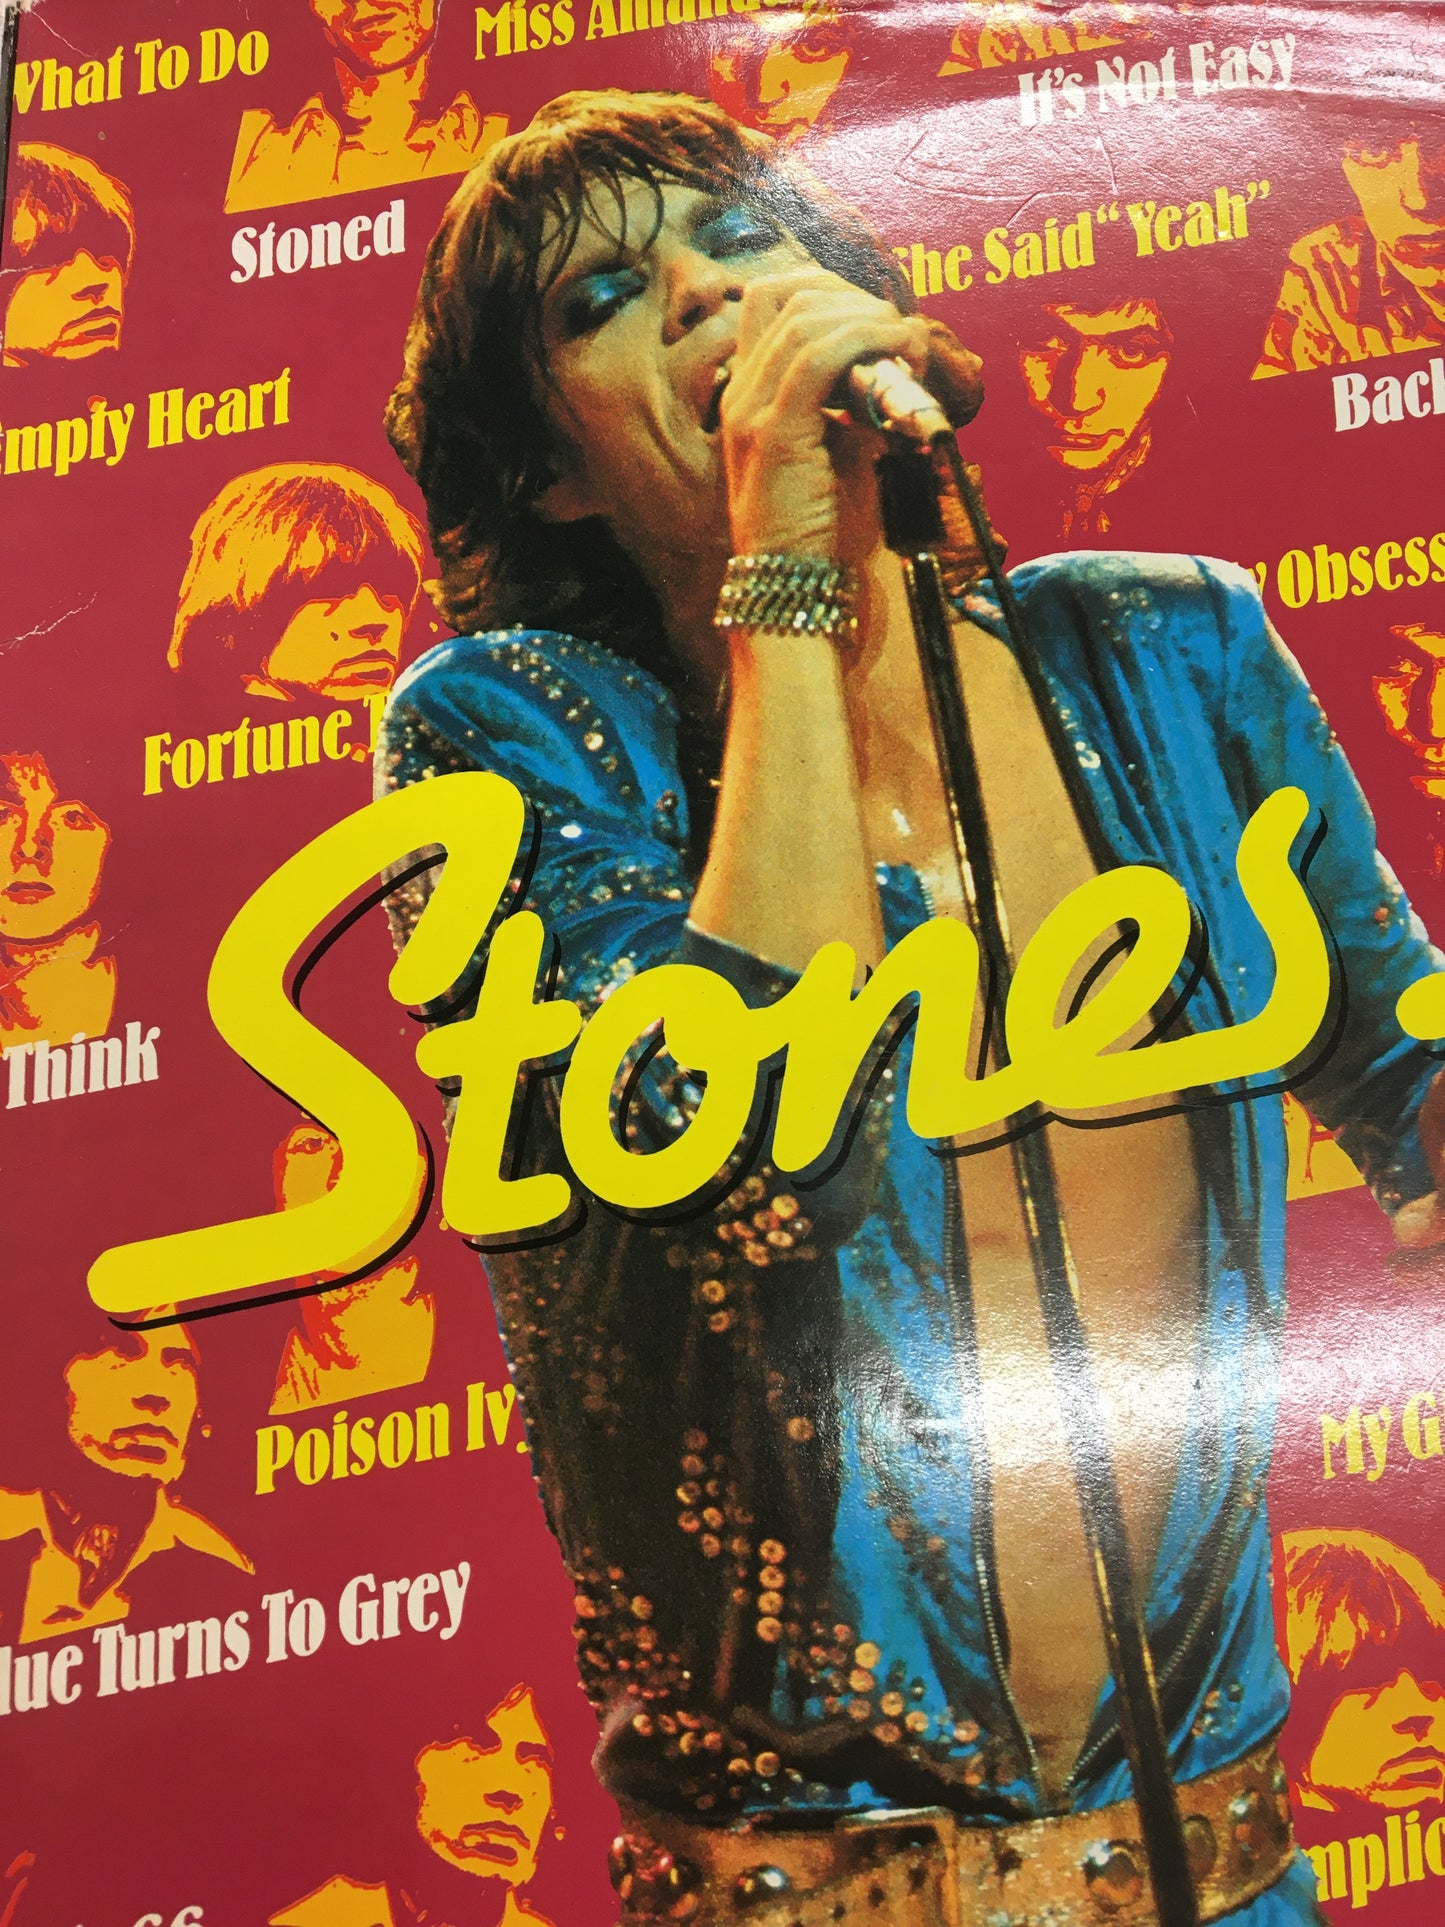 THE ROLLING STONES 2 LP ; STONES STORY 3